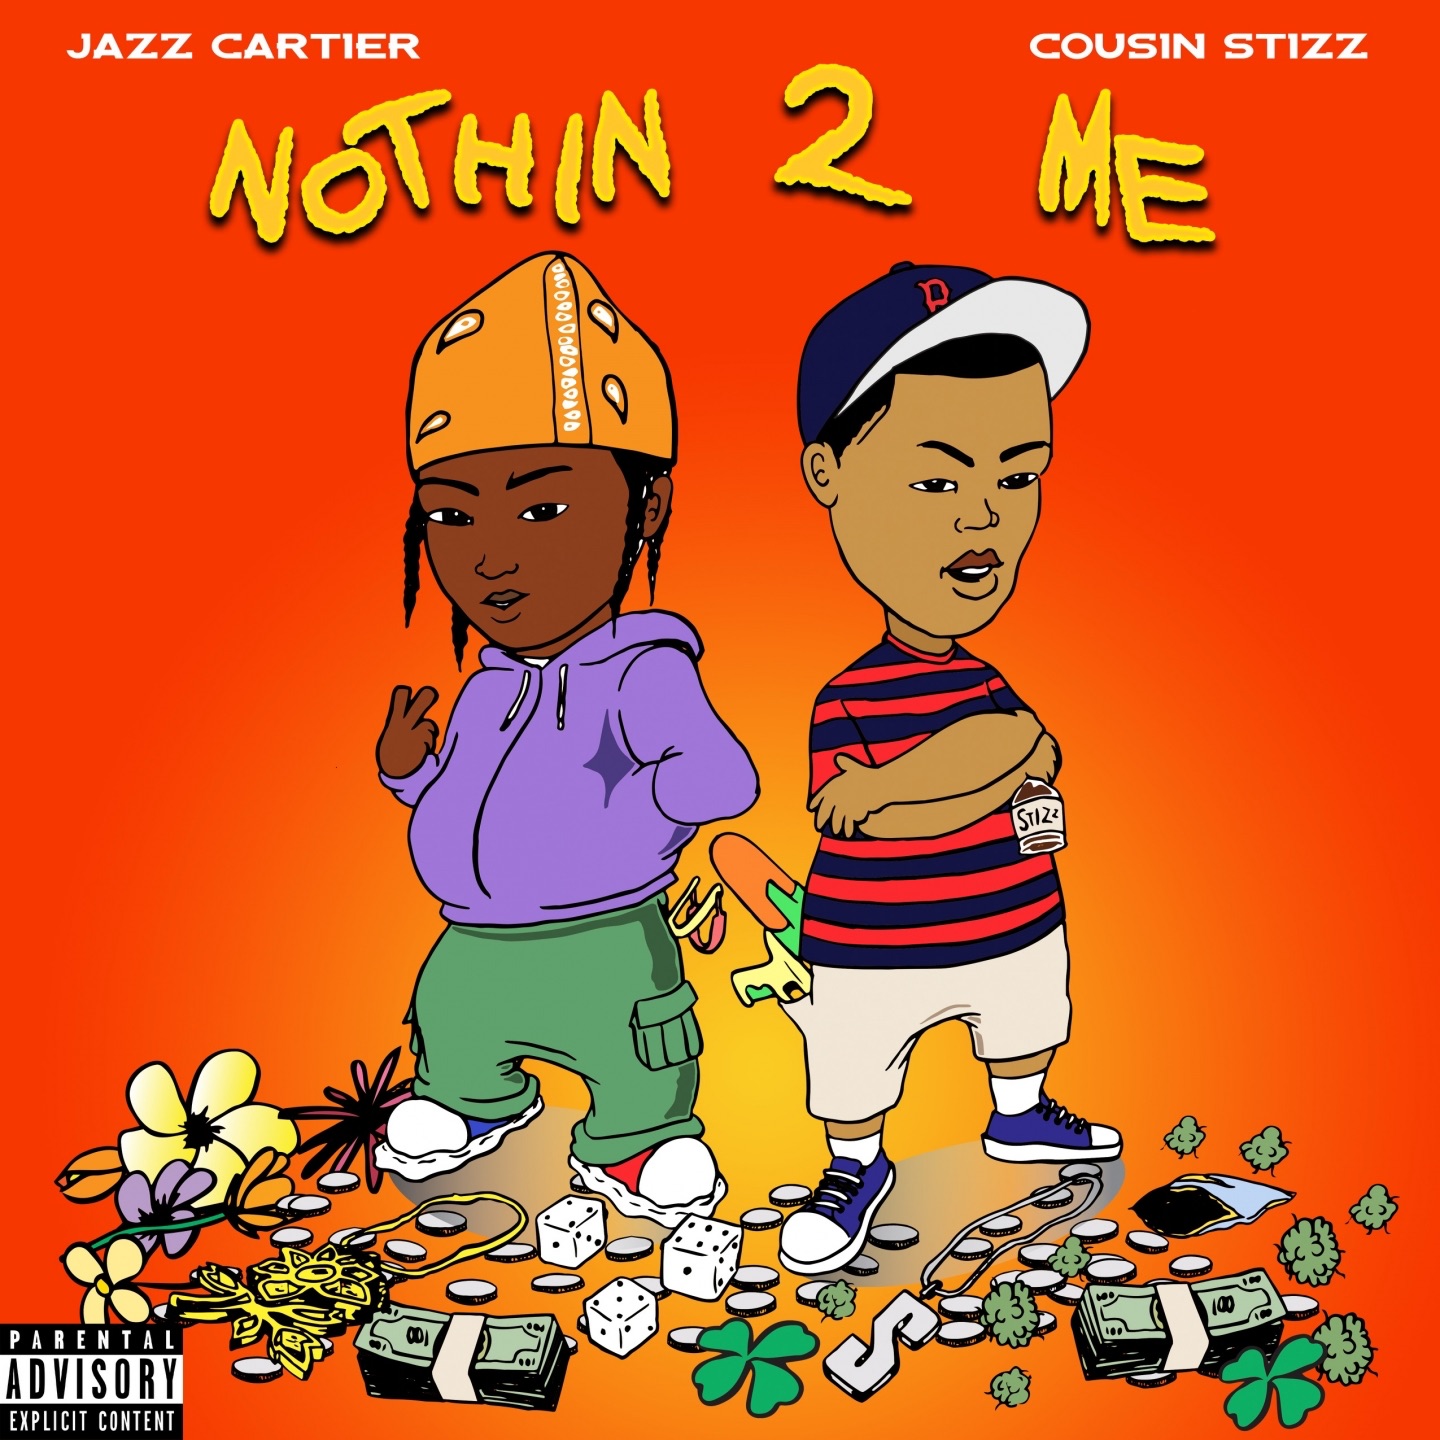 Jazz Cartier & Cousin Stizz - Nothin 2 Me - Single